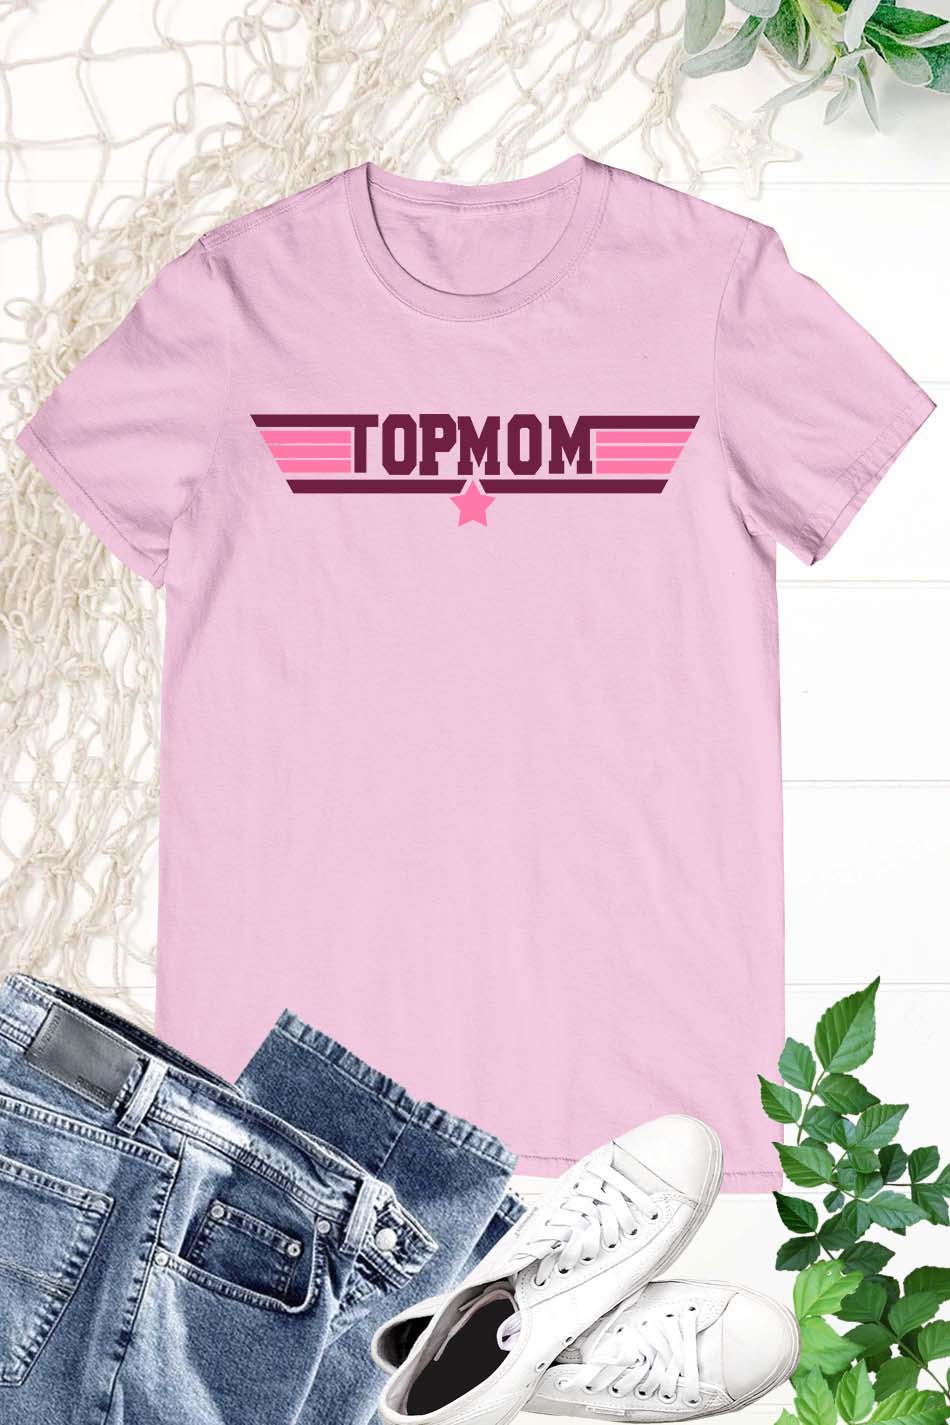 Top Mom T Shirt